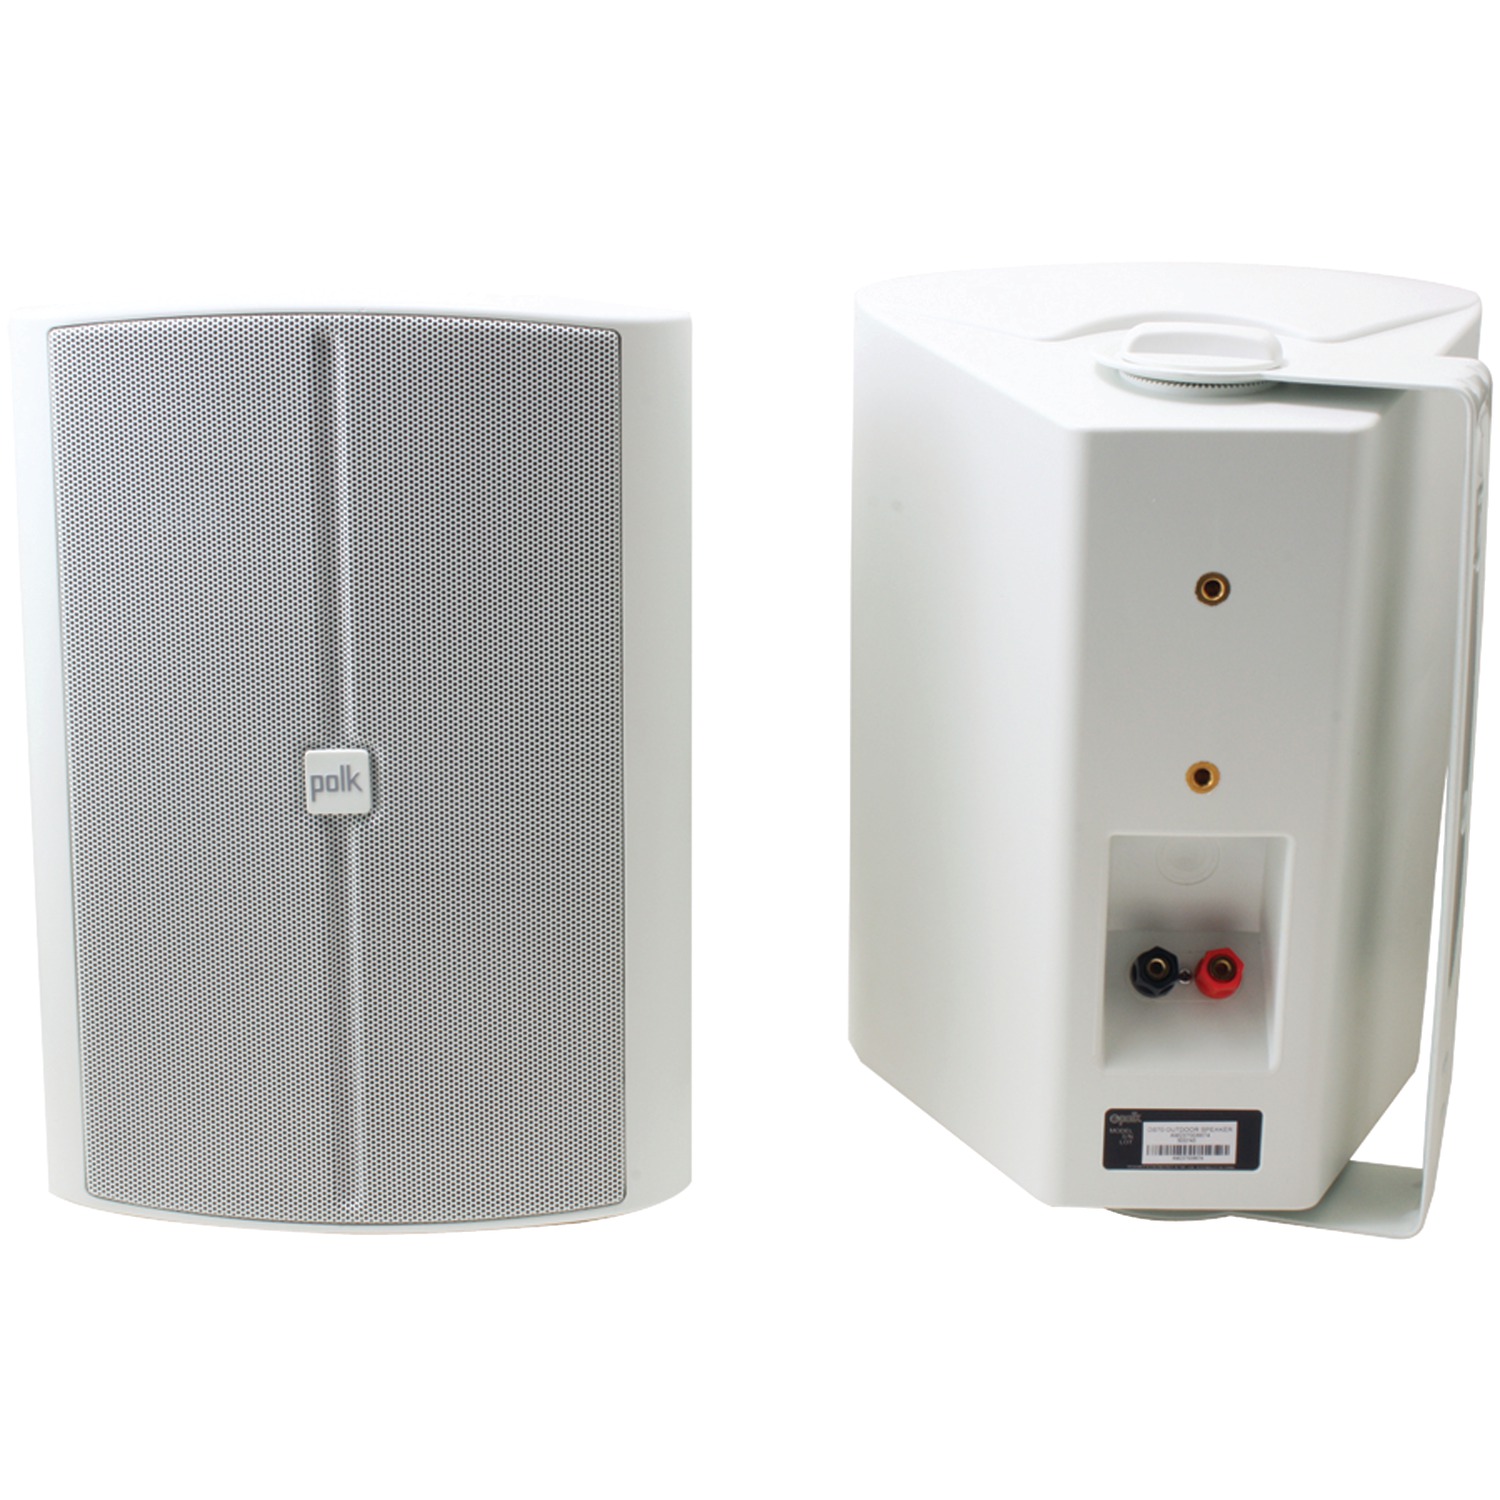 Polk Audio OS70 2-Way Indoor/Outdoor Speakers (Pair, White) - image 2 of 3